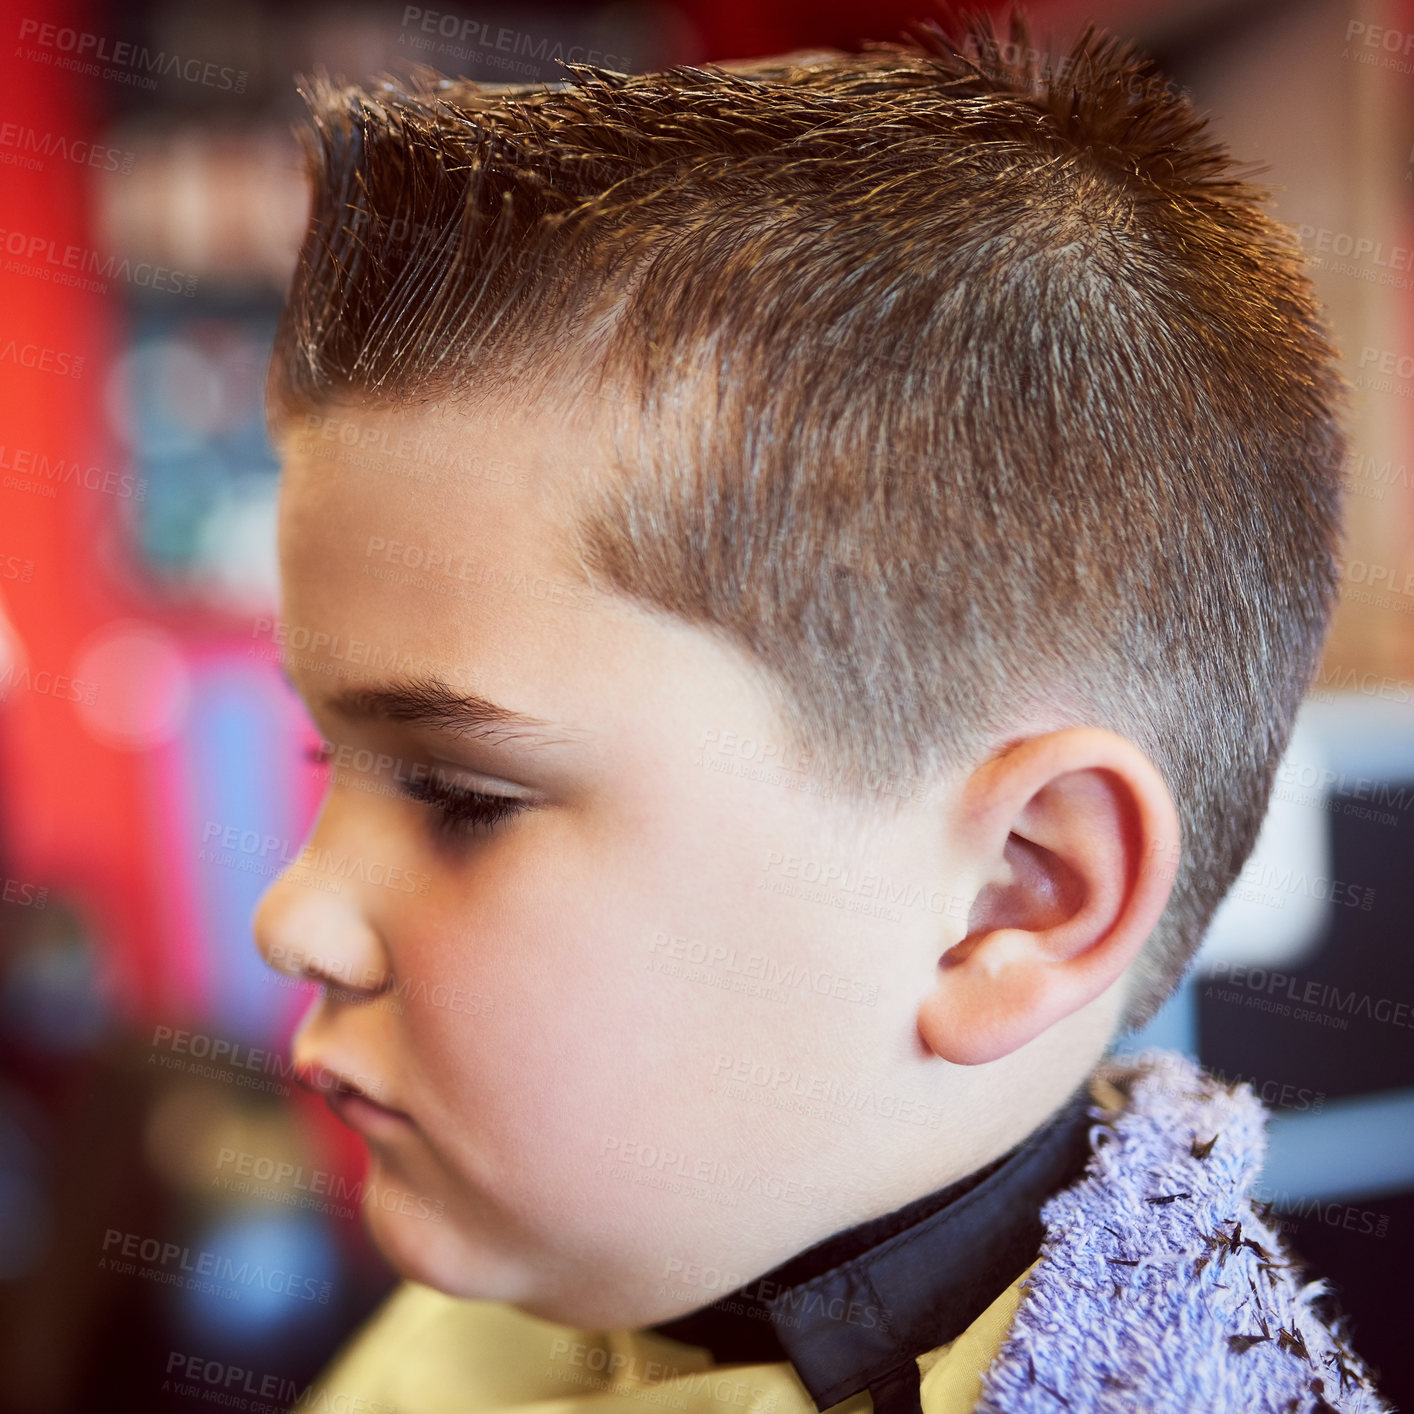 Buy stock photo Closeup shot of a young boy getting a haircut at a barber shop